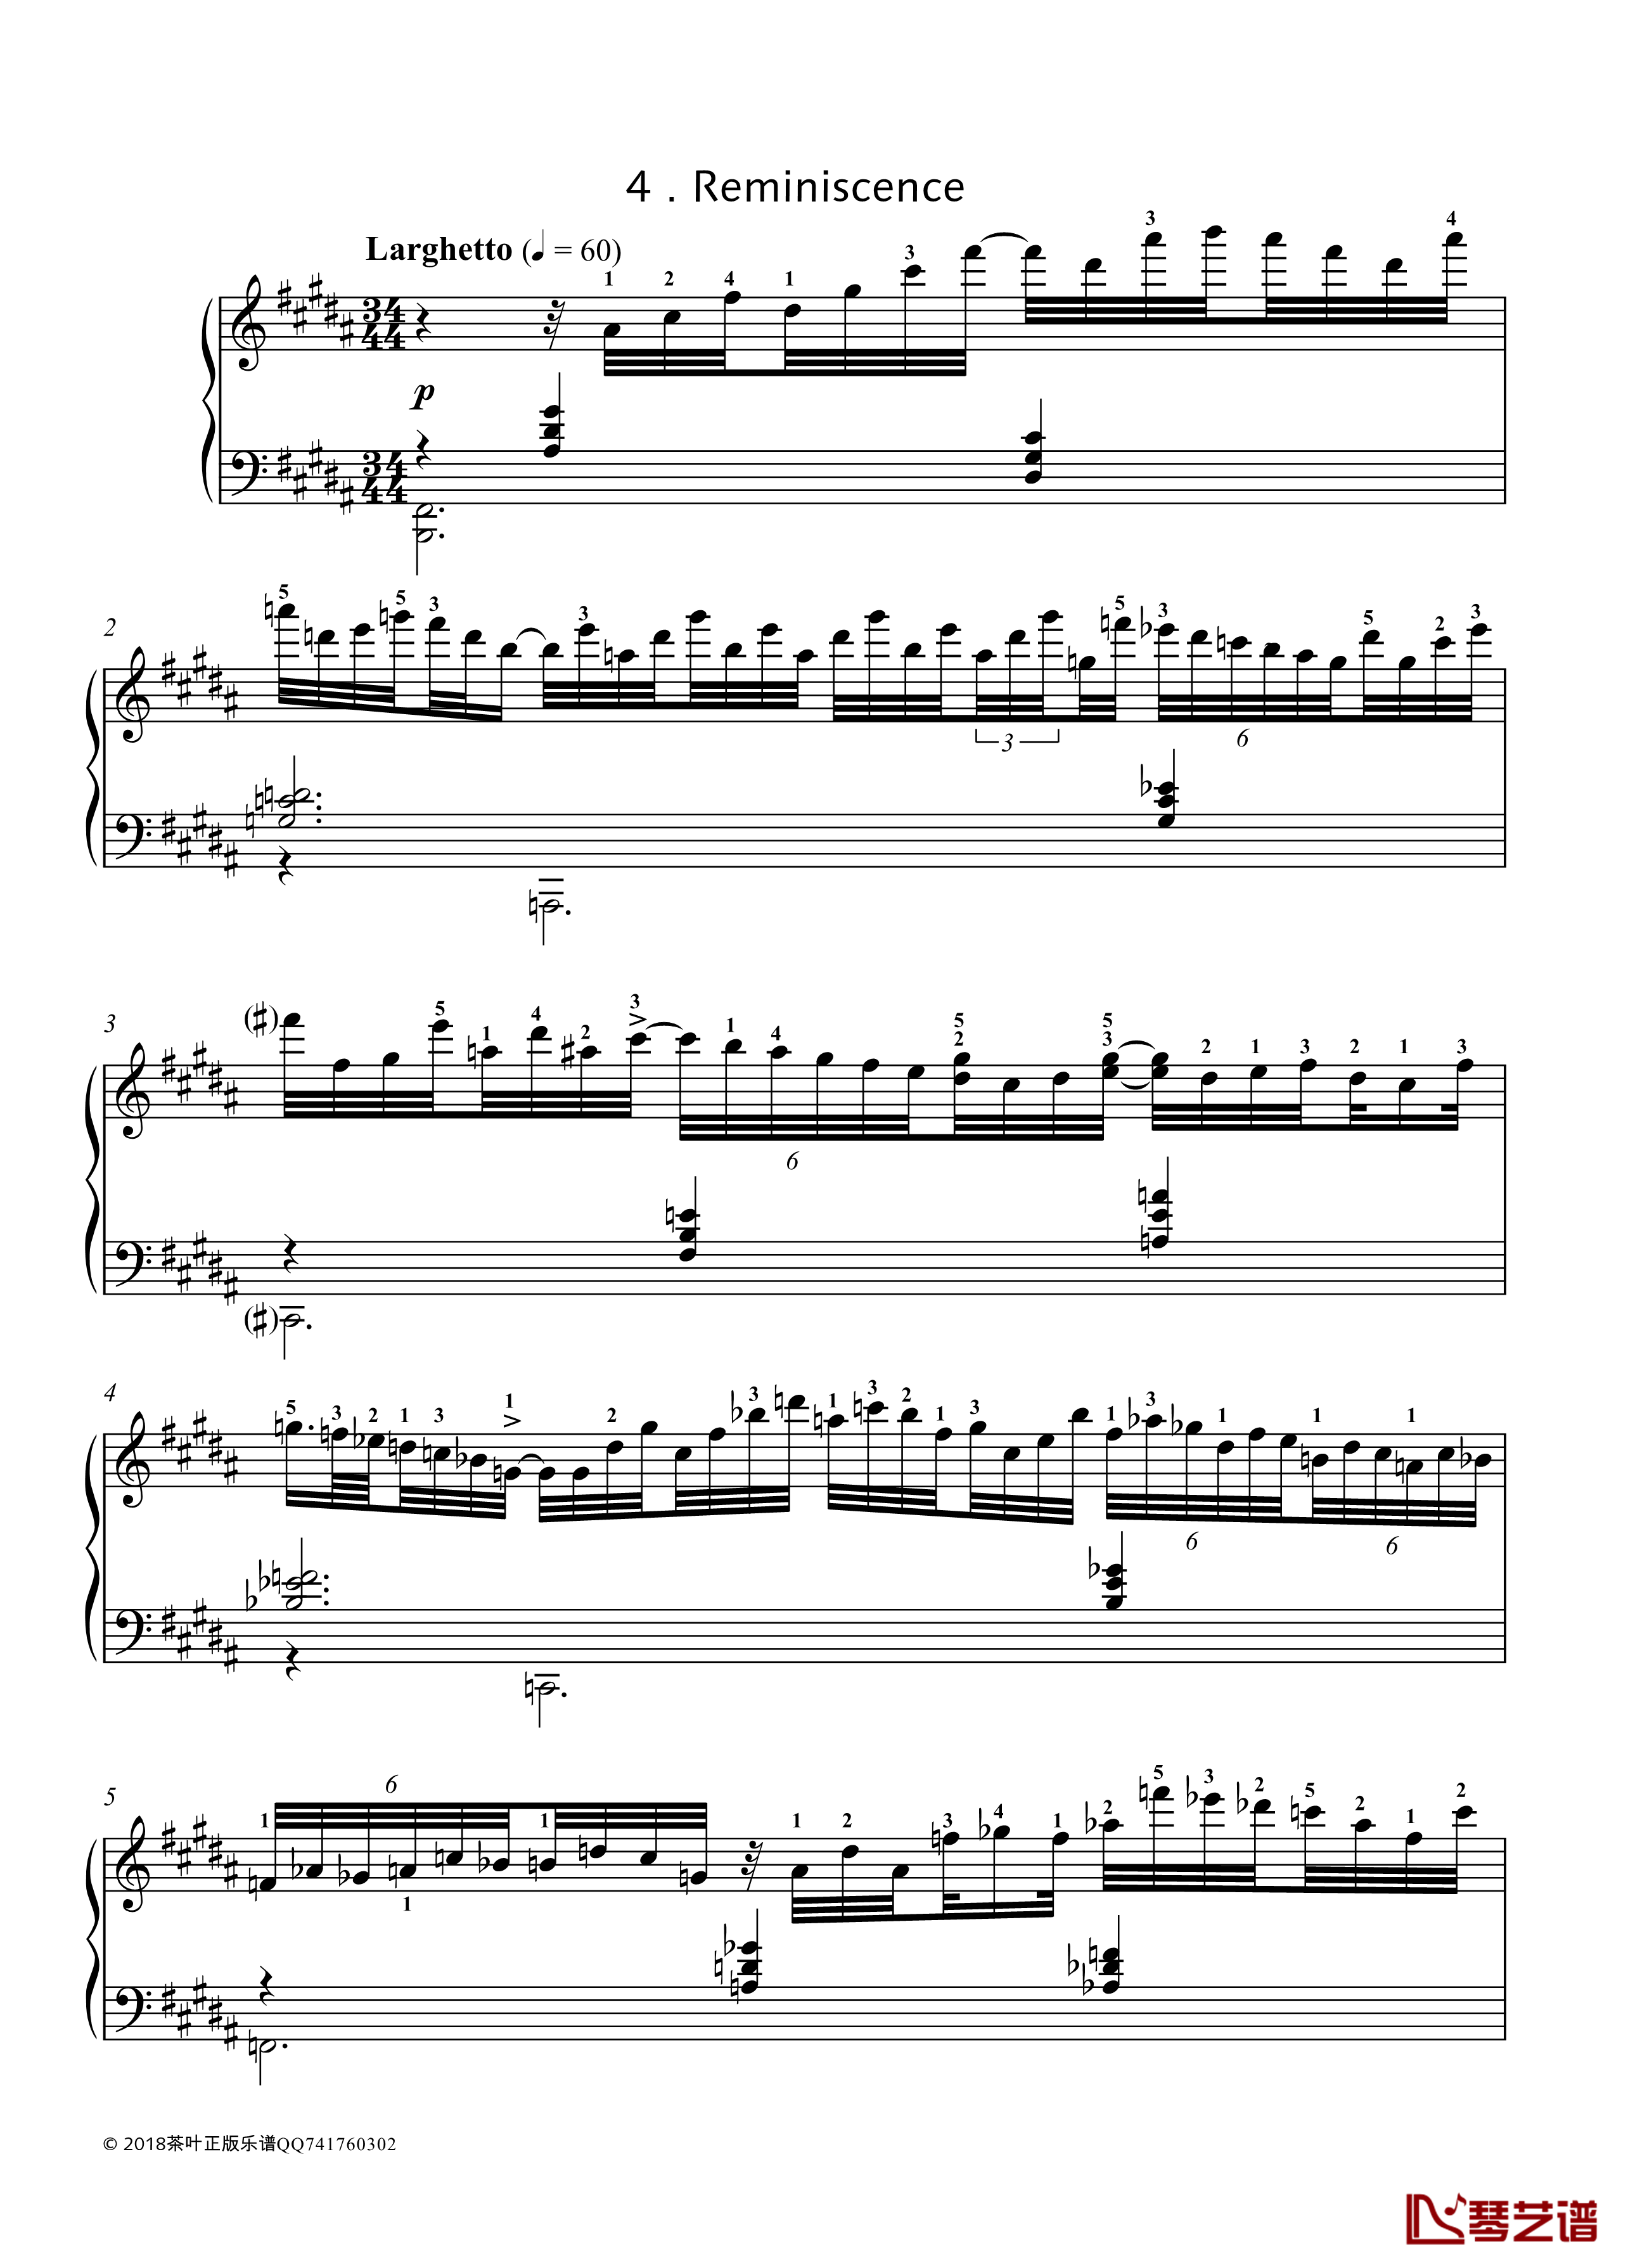 No. 4. Reminiscence钢琴谱-带指法-八首音乐会练习曲  Eight Concert ?tudes Op 40 - -爵士-尼古拉·凯帕斯汀1